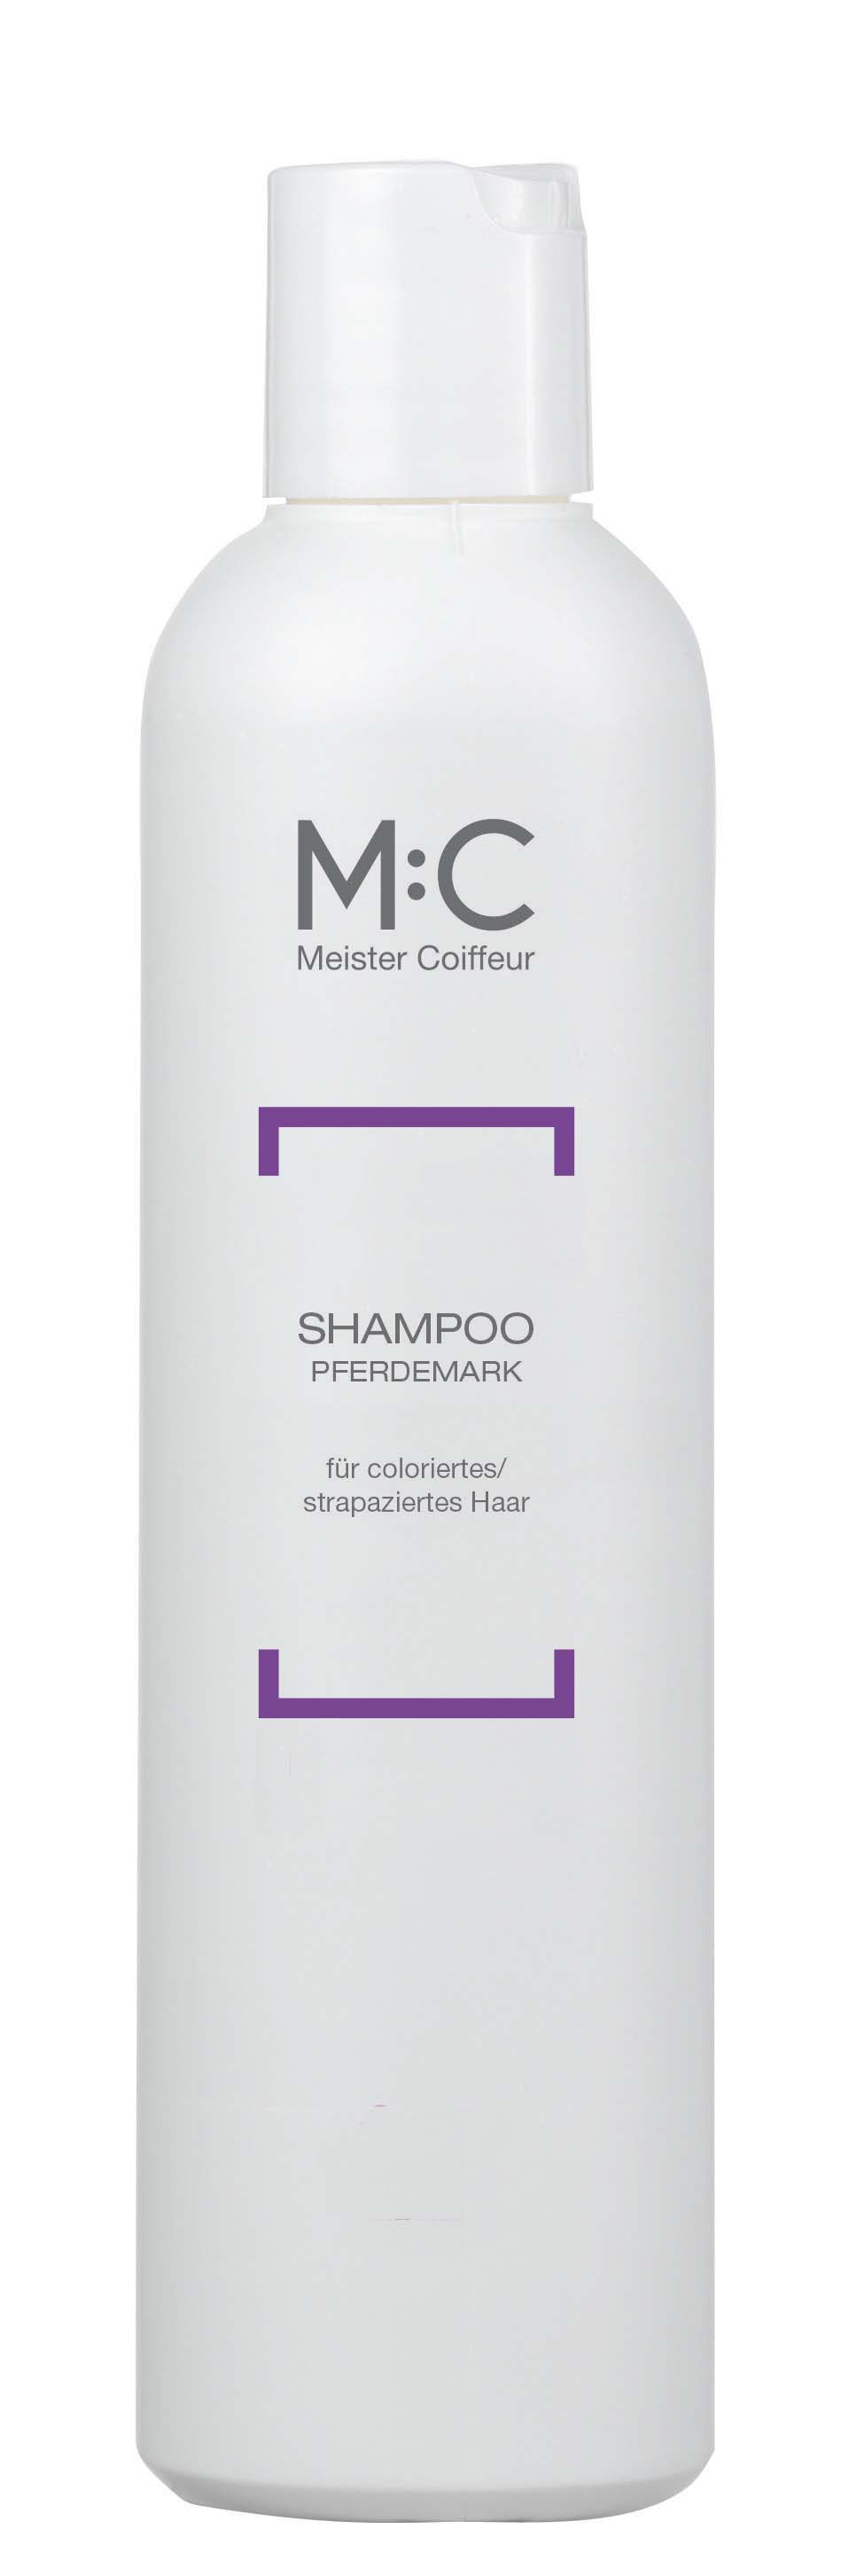 M:C Shampoo Baume capillaire Pferdemark C 250 ml